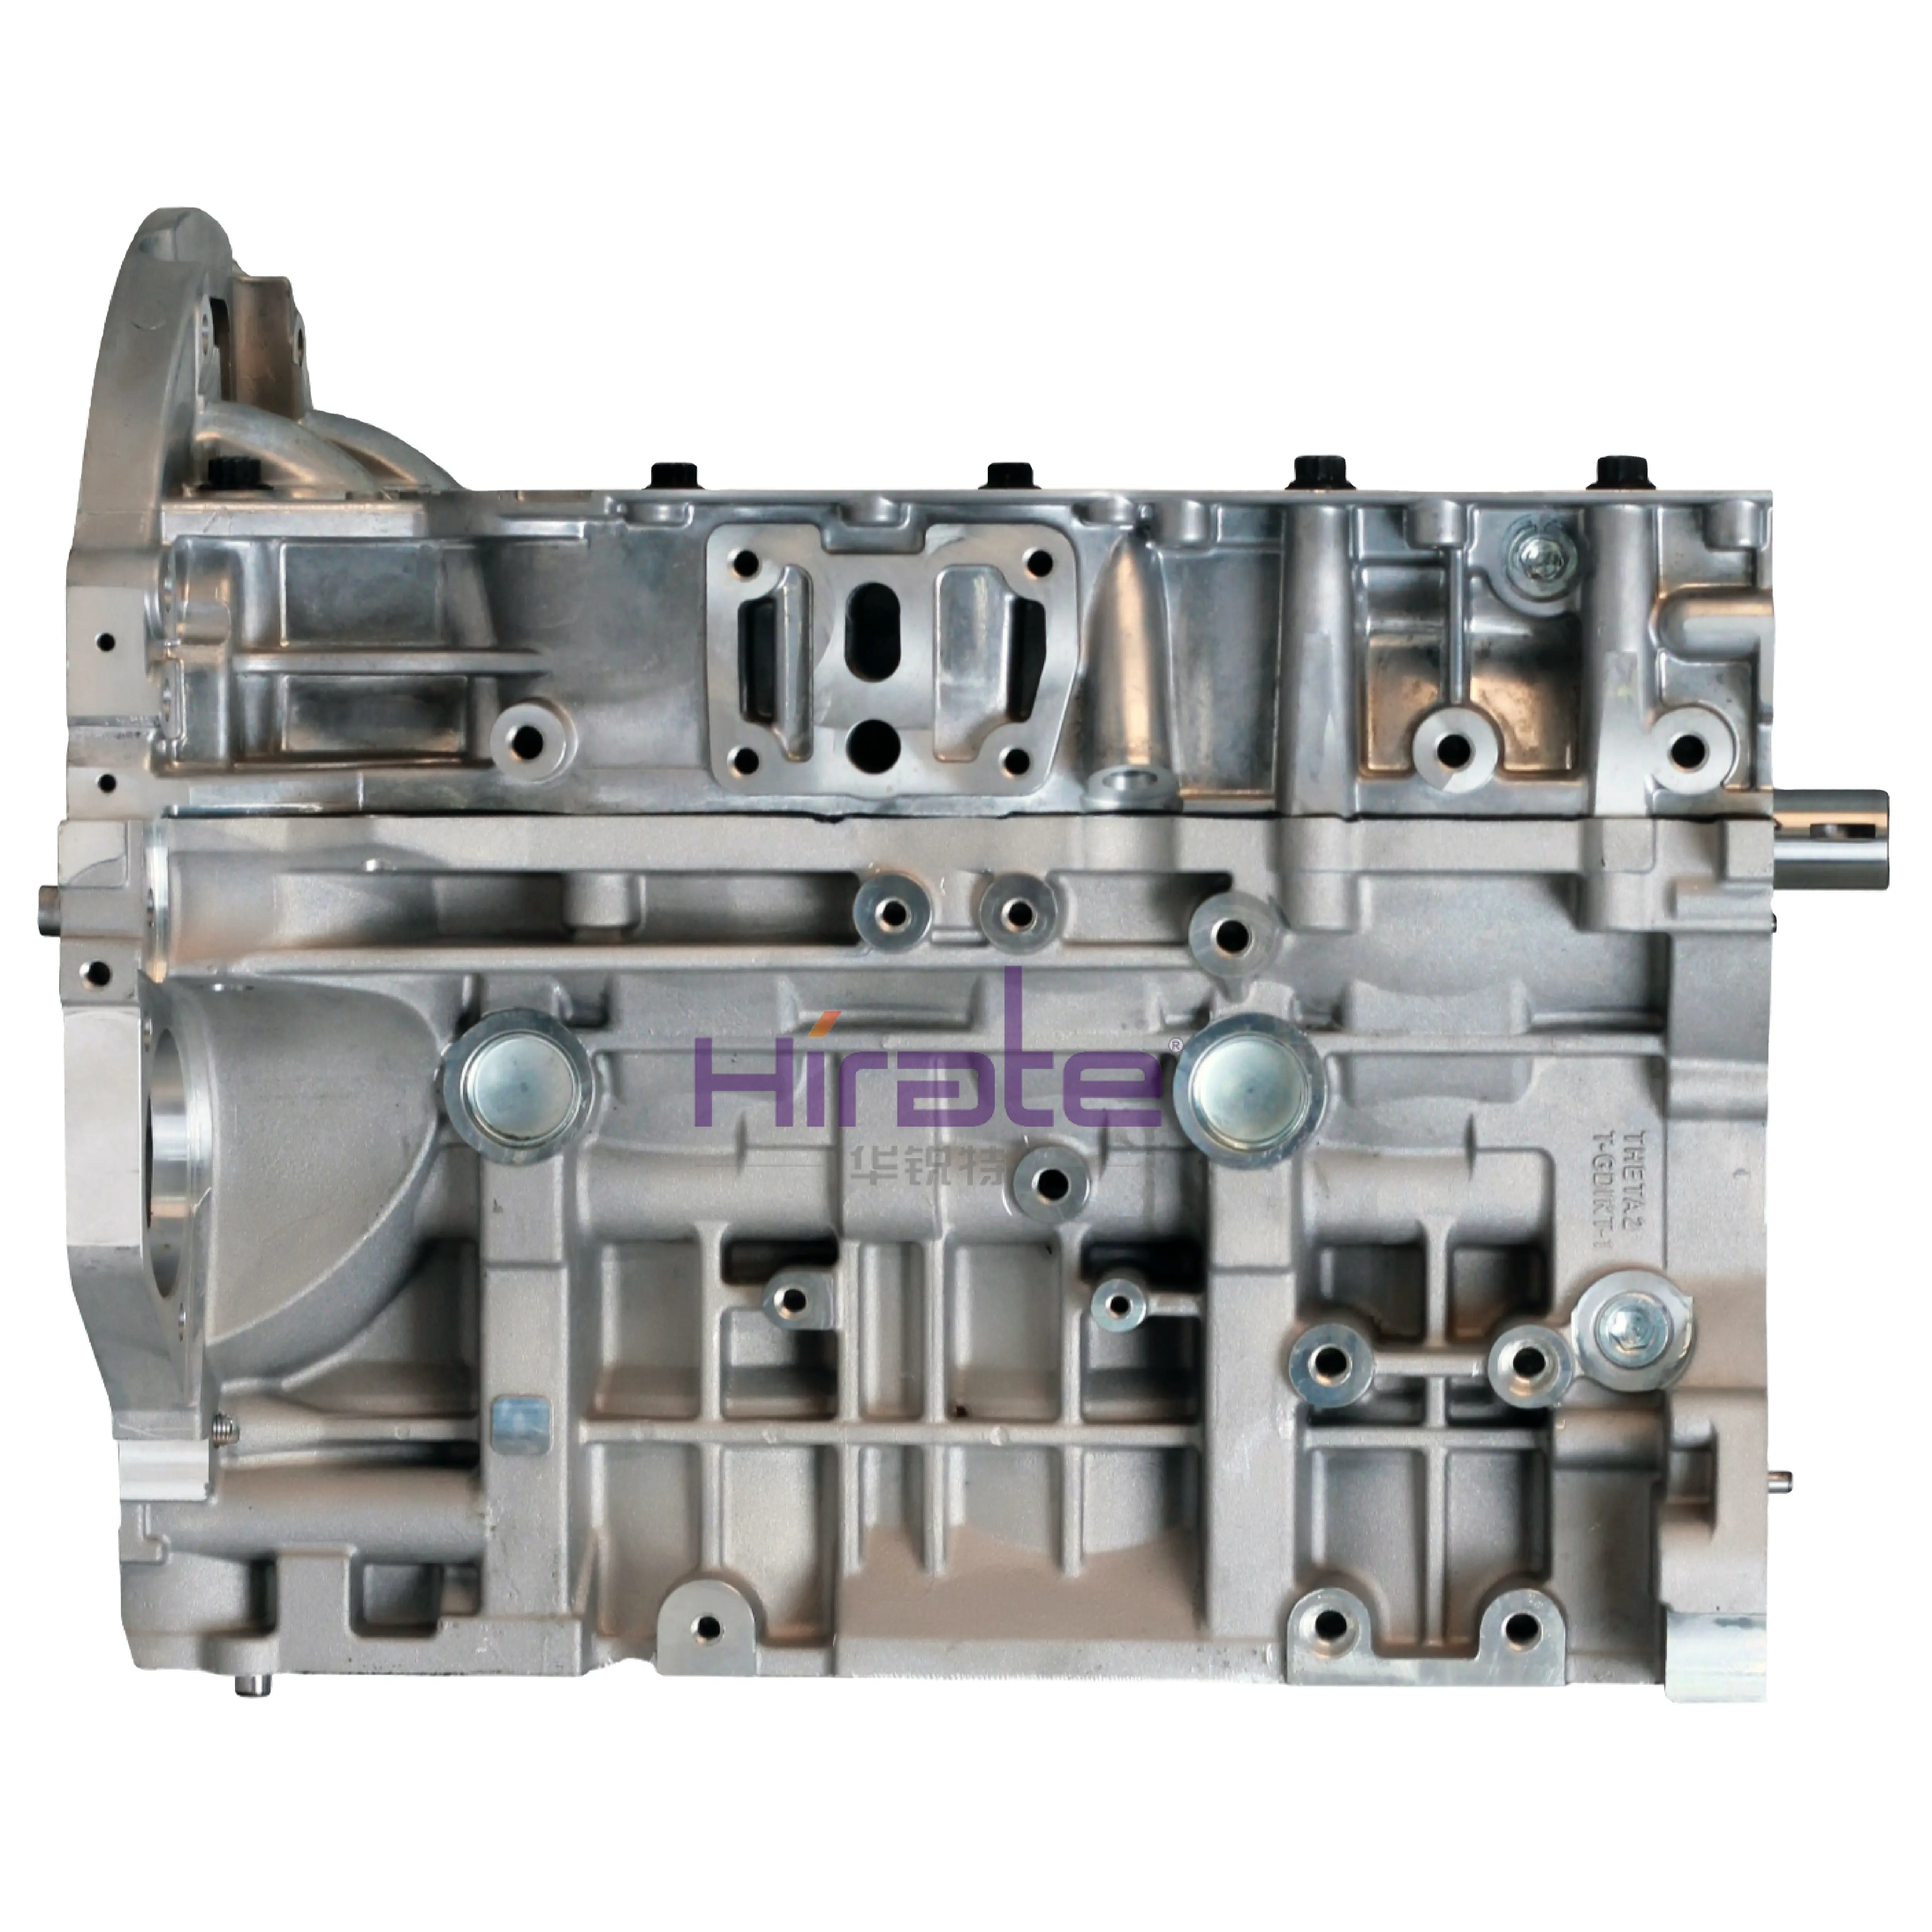 G4ke vendita in fabbrica vari motori Diesel Diesel ampiamente usati avviamento elettrico Diesel olio motore per auto Diesel